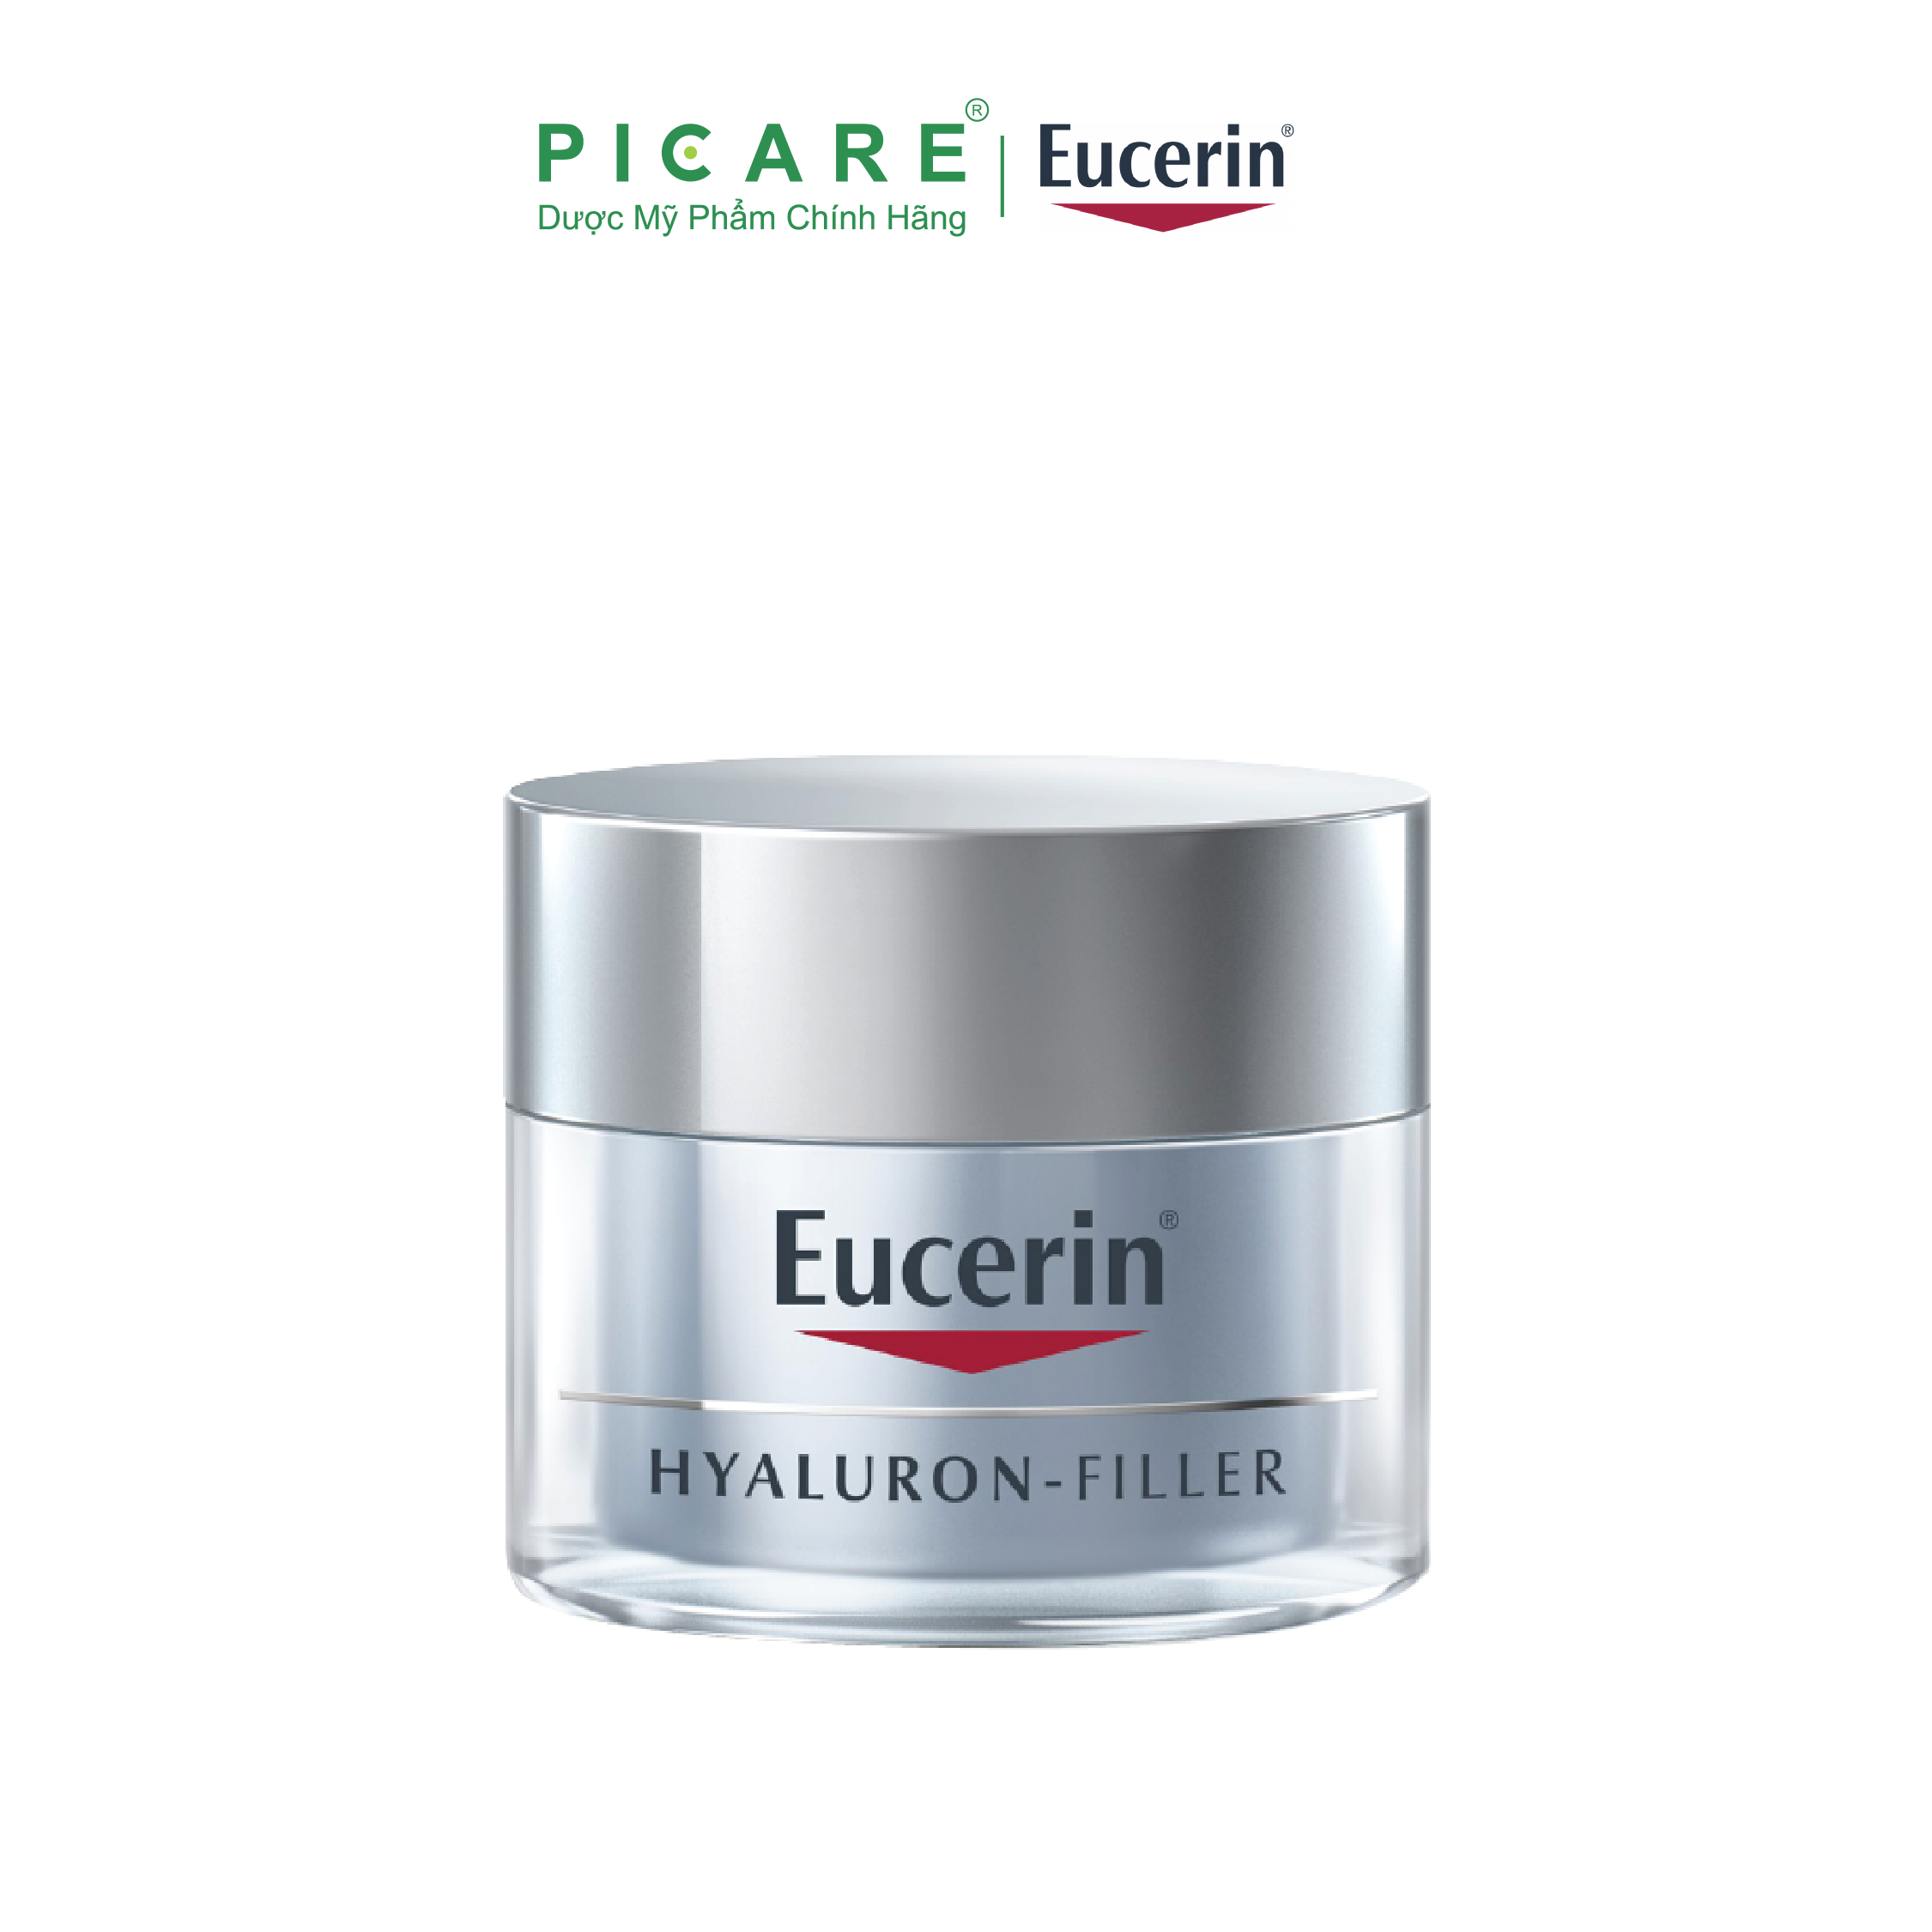 Kem dưỡng đêm giảm nếp nhăn Eucerin Hyaluron[3x]+ Filler Night Cream 50ml